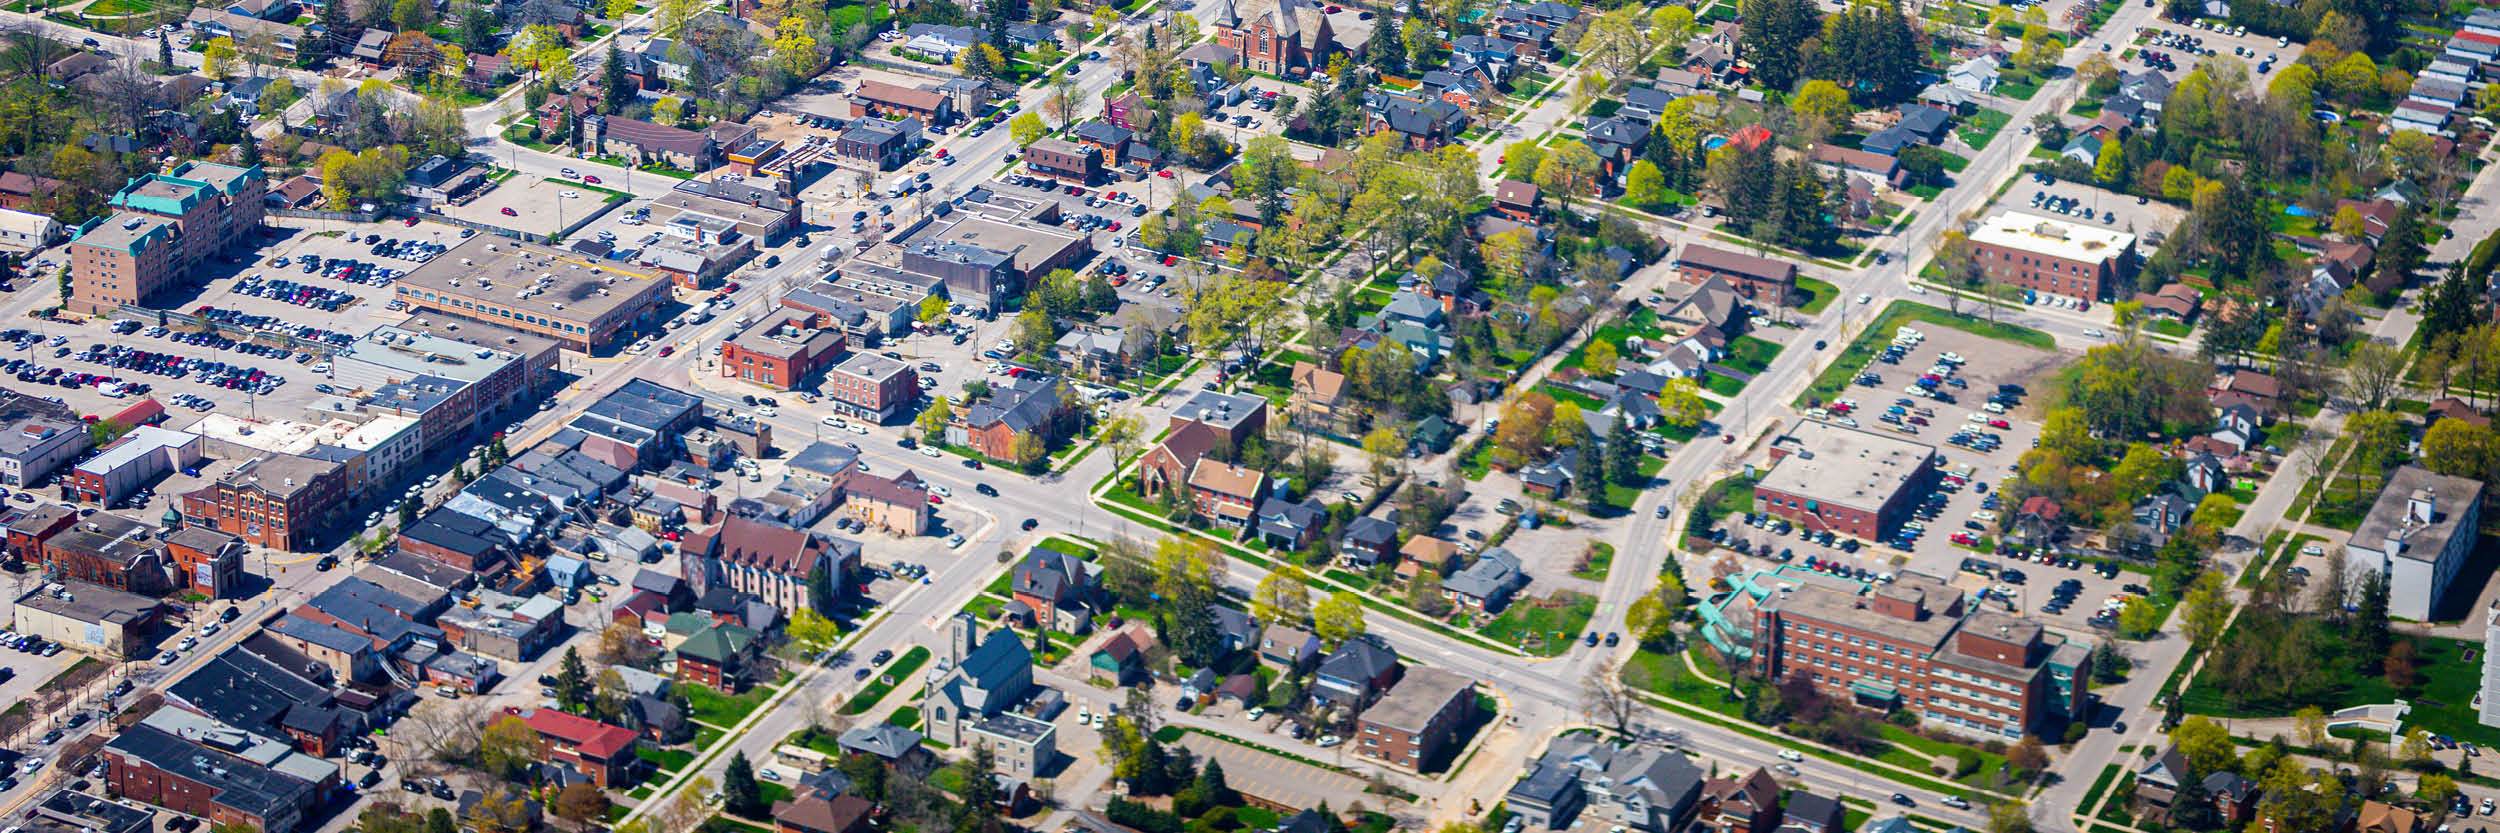 Aerial view of commercial buildings in Orangeville